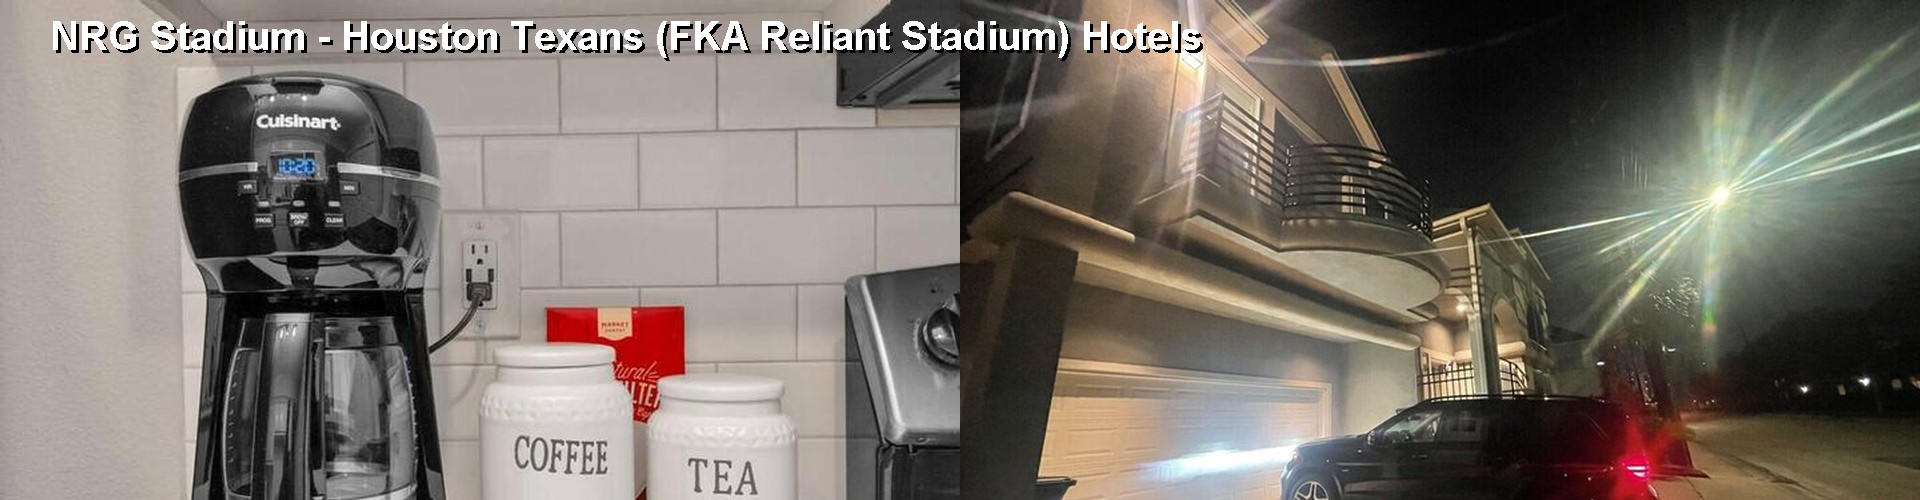 3 Best Hotels near NRG Stadium - Houston Texans (FKA Reliant Stadium)